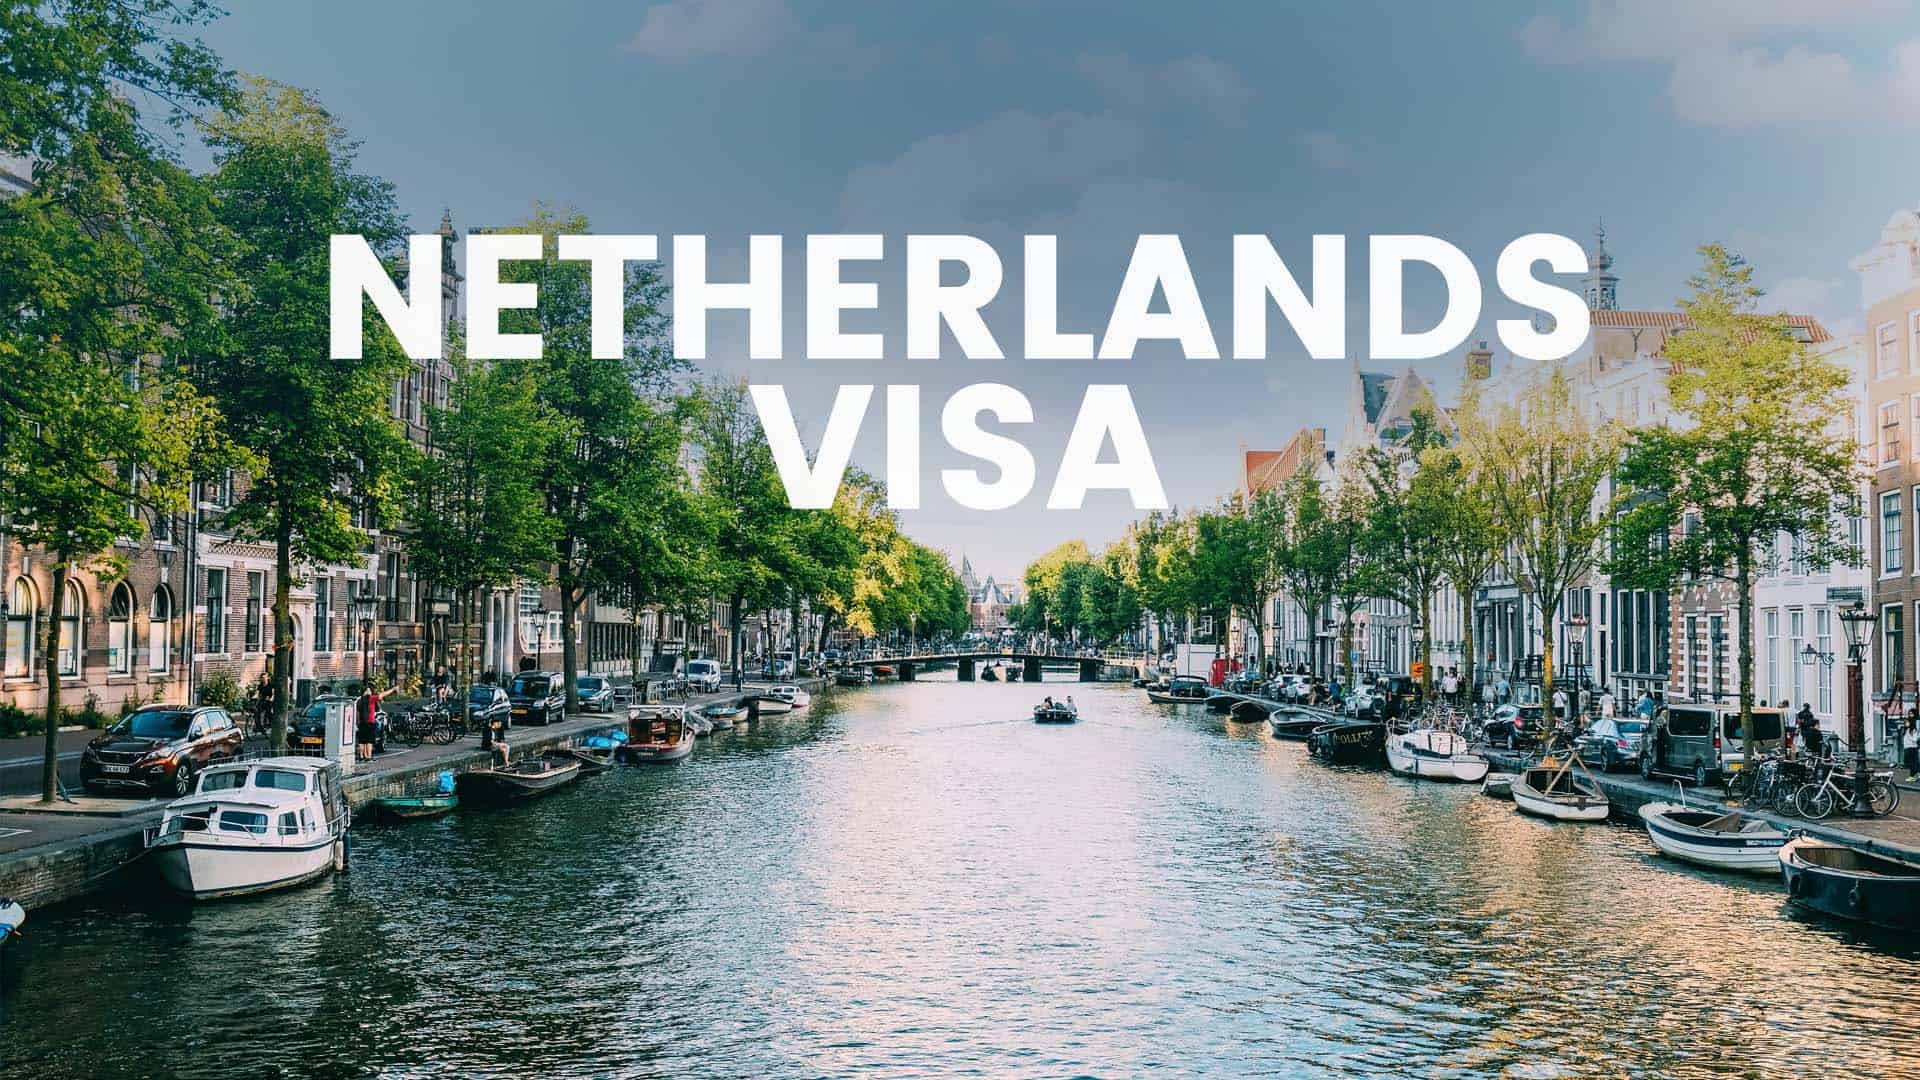 visit visa to amsterdam from dubai